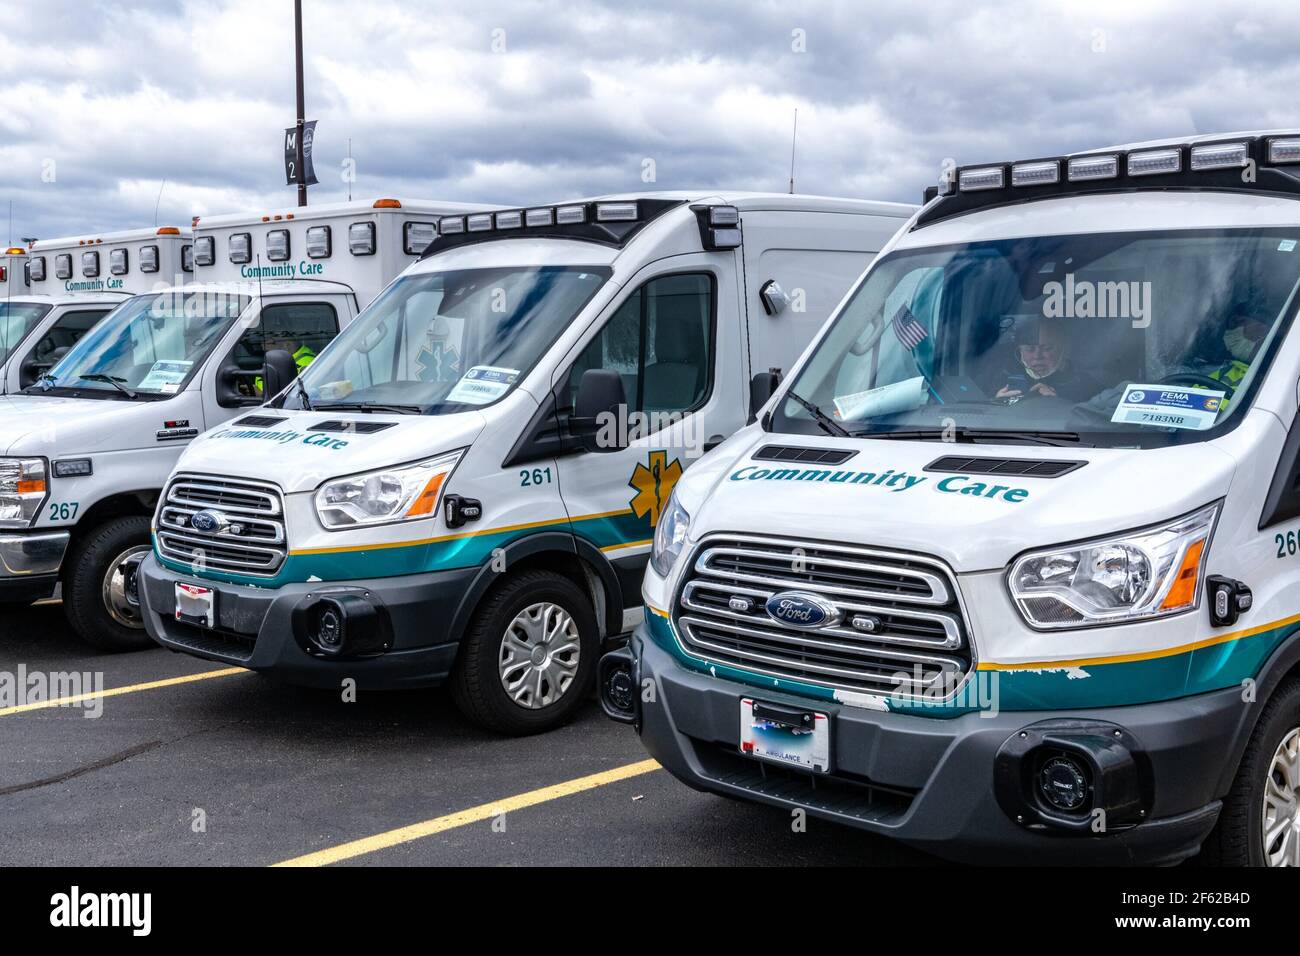 Ambulances, Coronavirus Pandemic Stock Photo